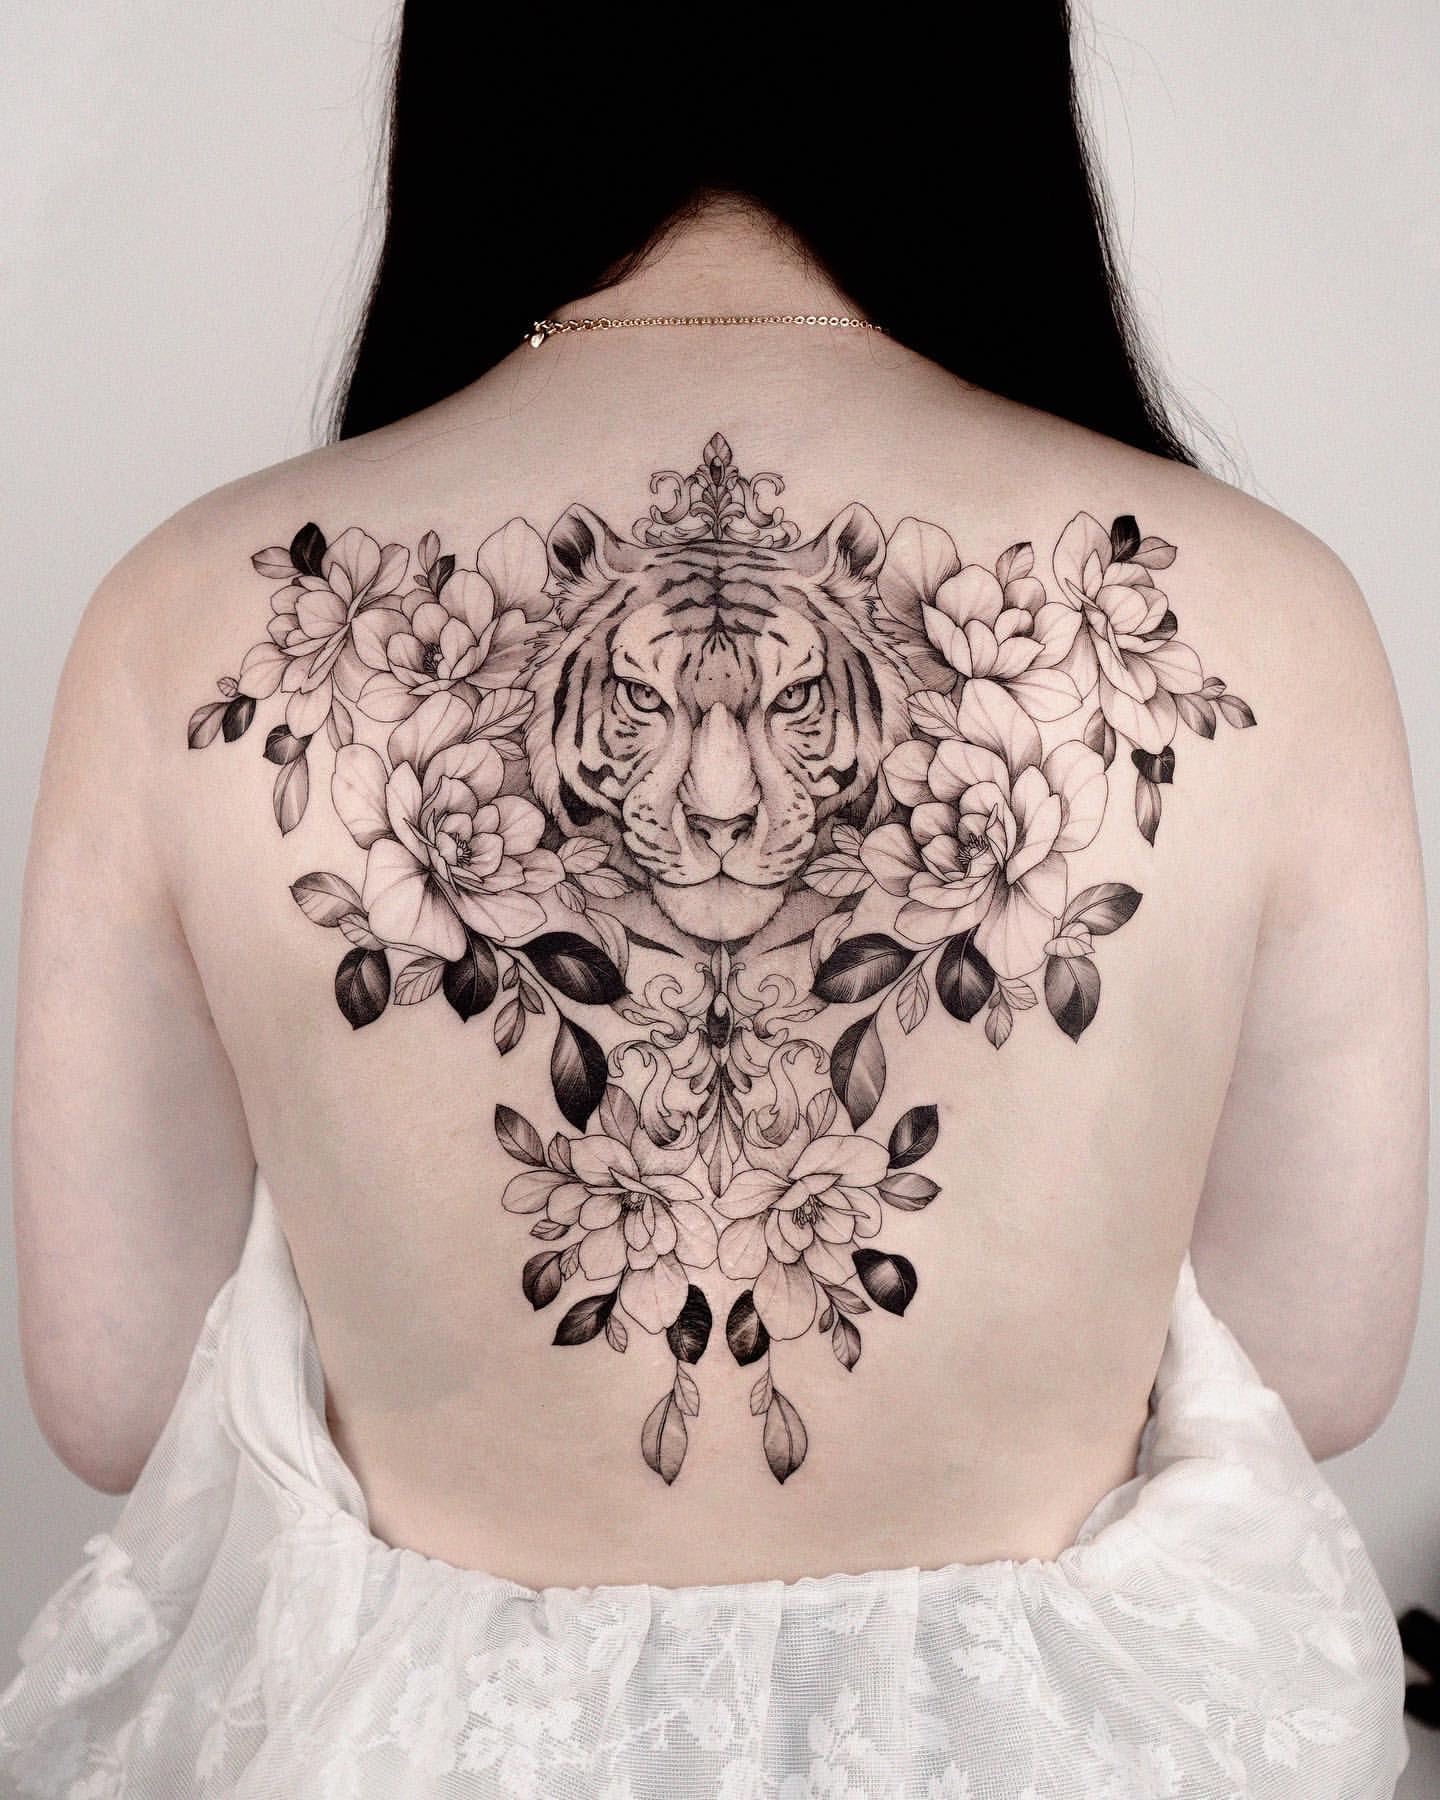 Back Tattoo Ideas for Women 50